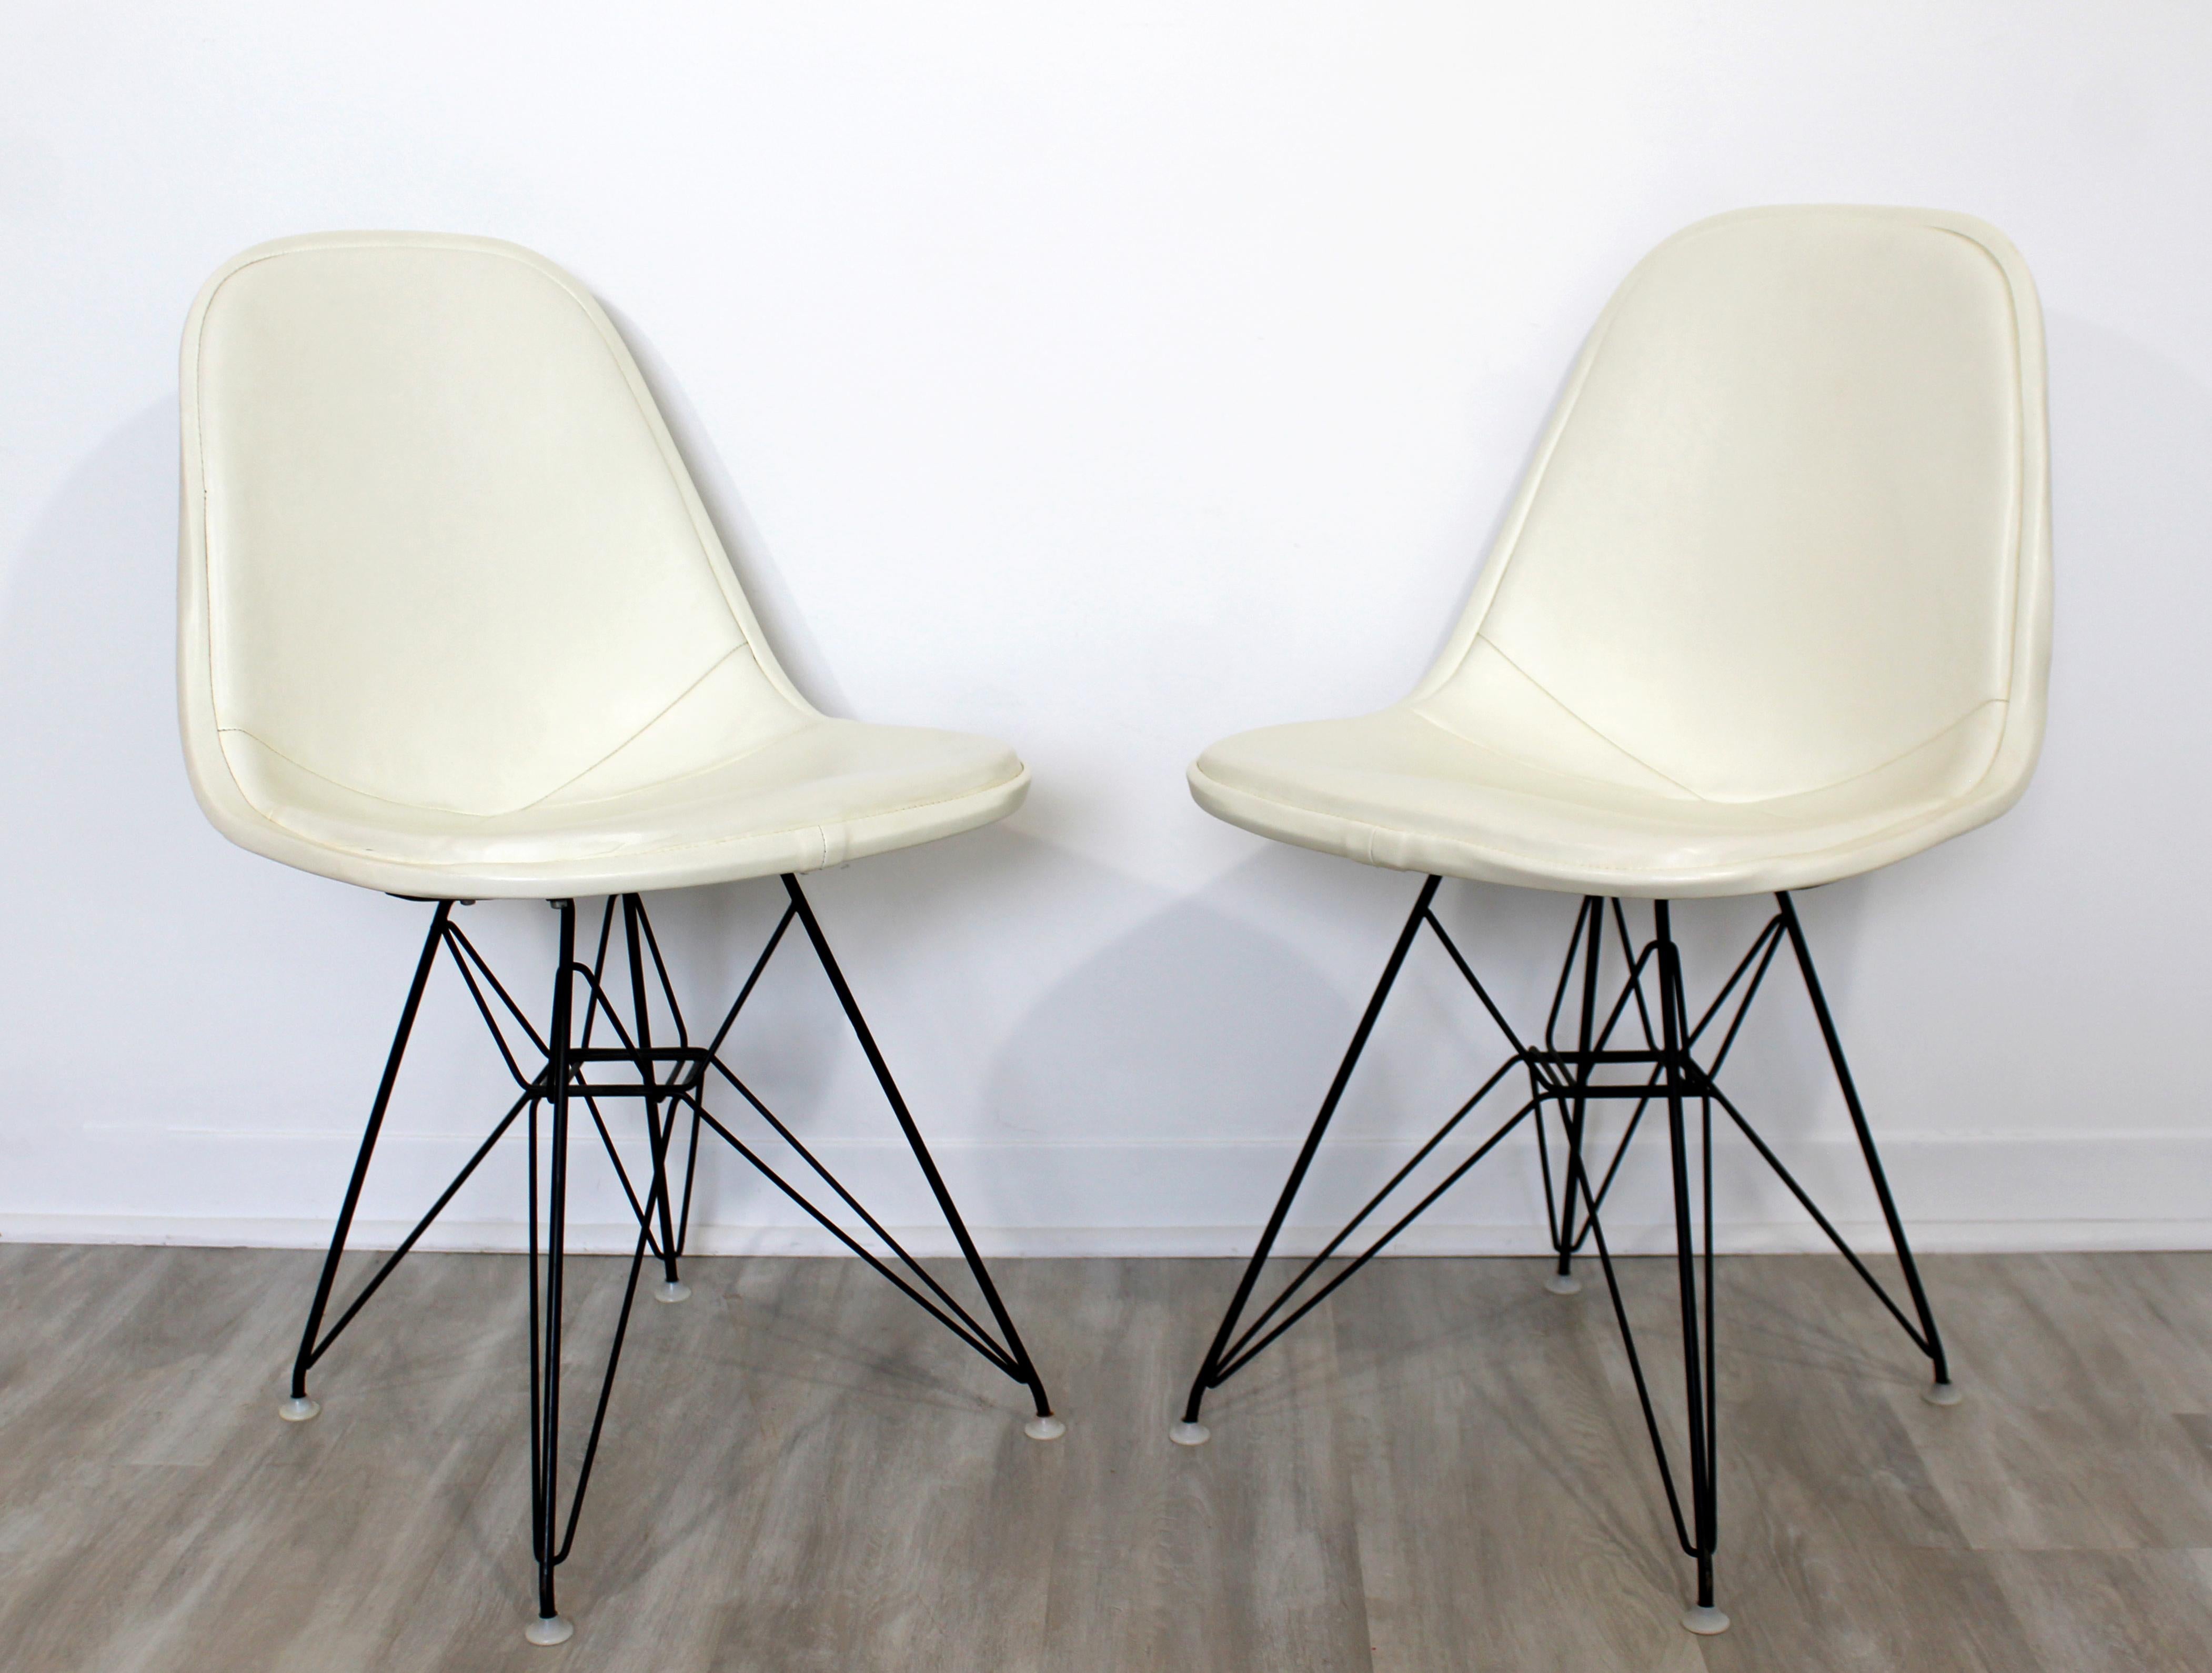 American Mid-Century Modern Eames Herman Miller Eiffel Tower DKR Set of 6 Side Chairs